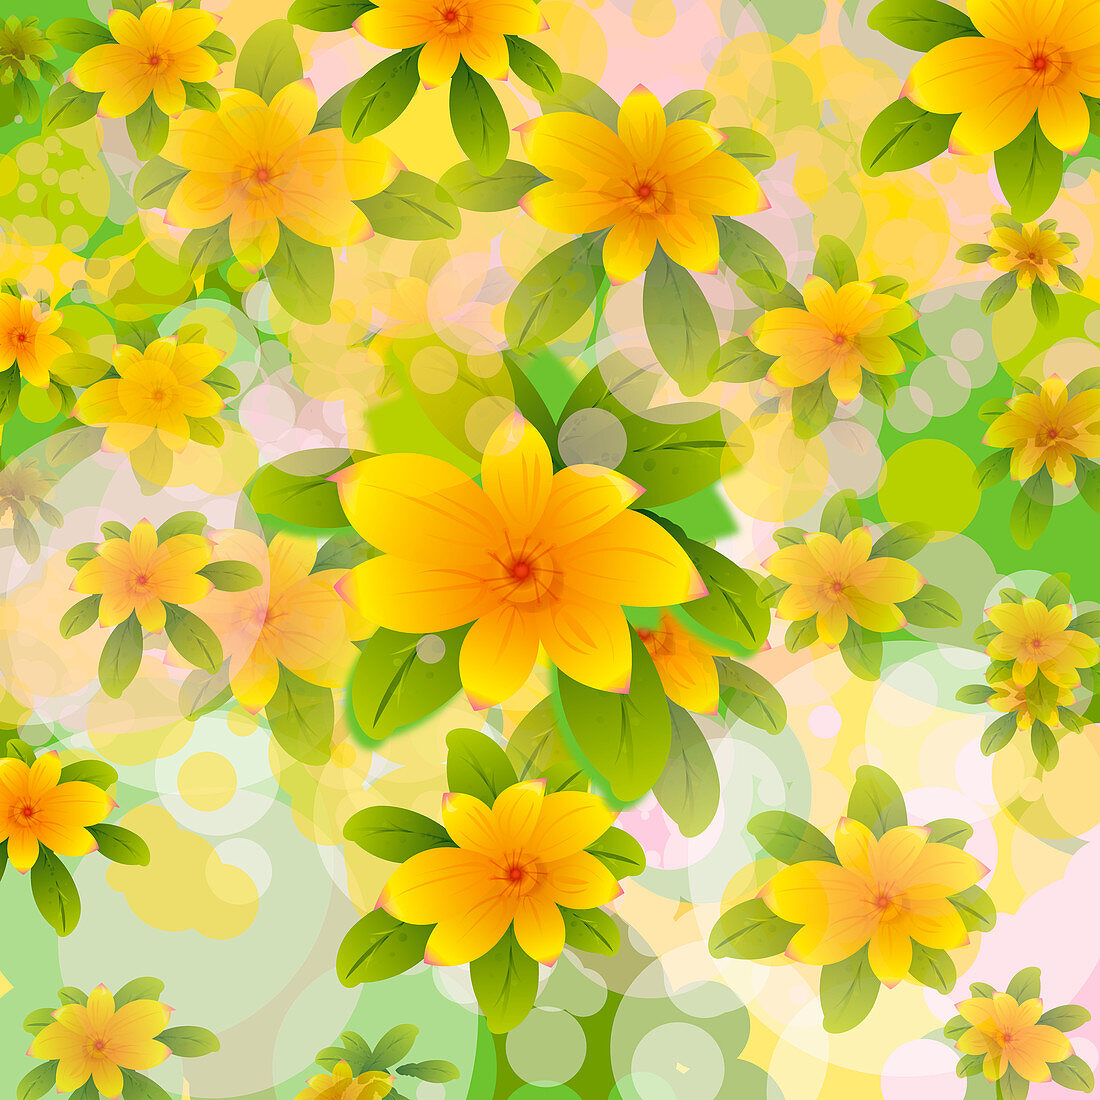 Flower pattern, illustration